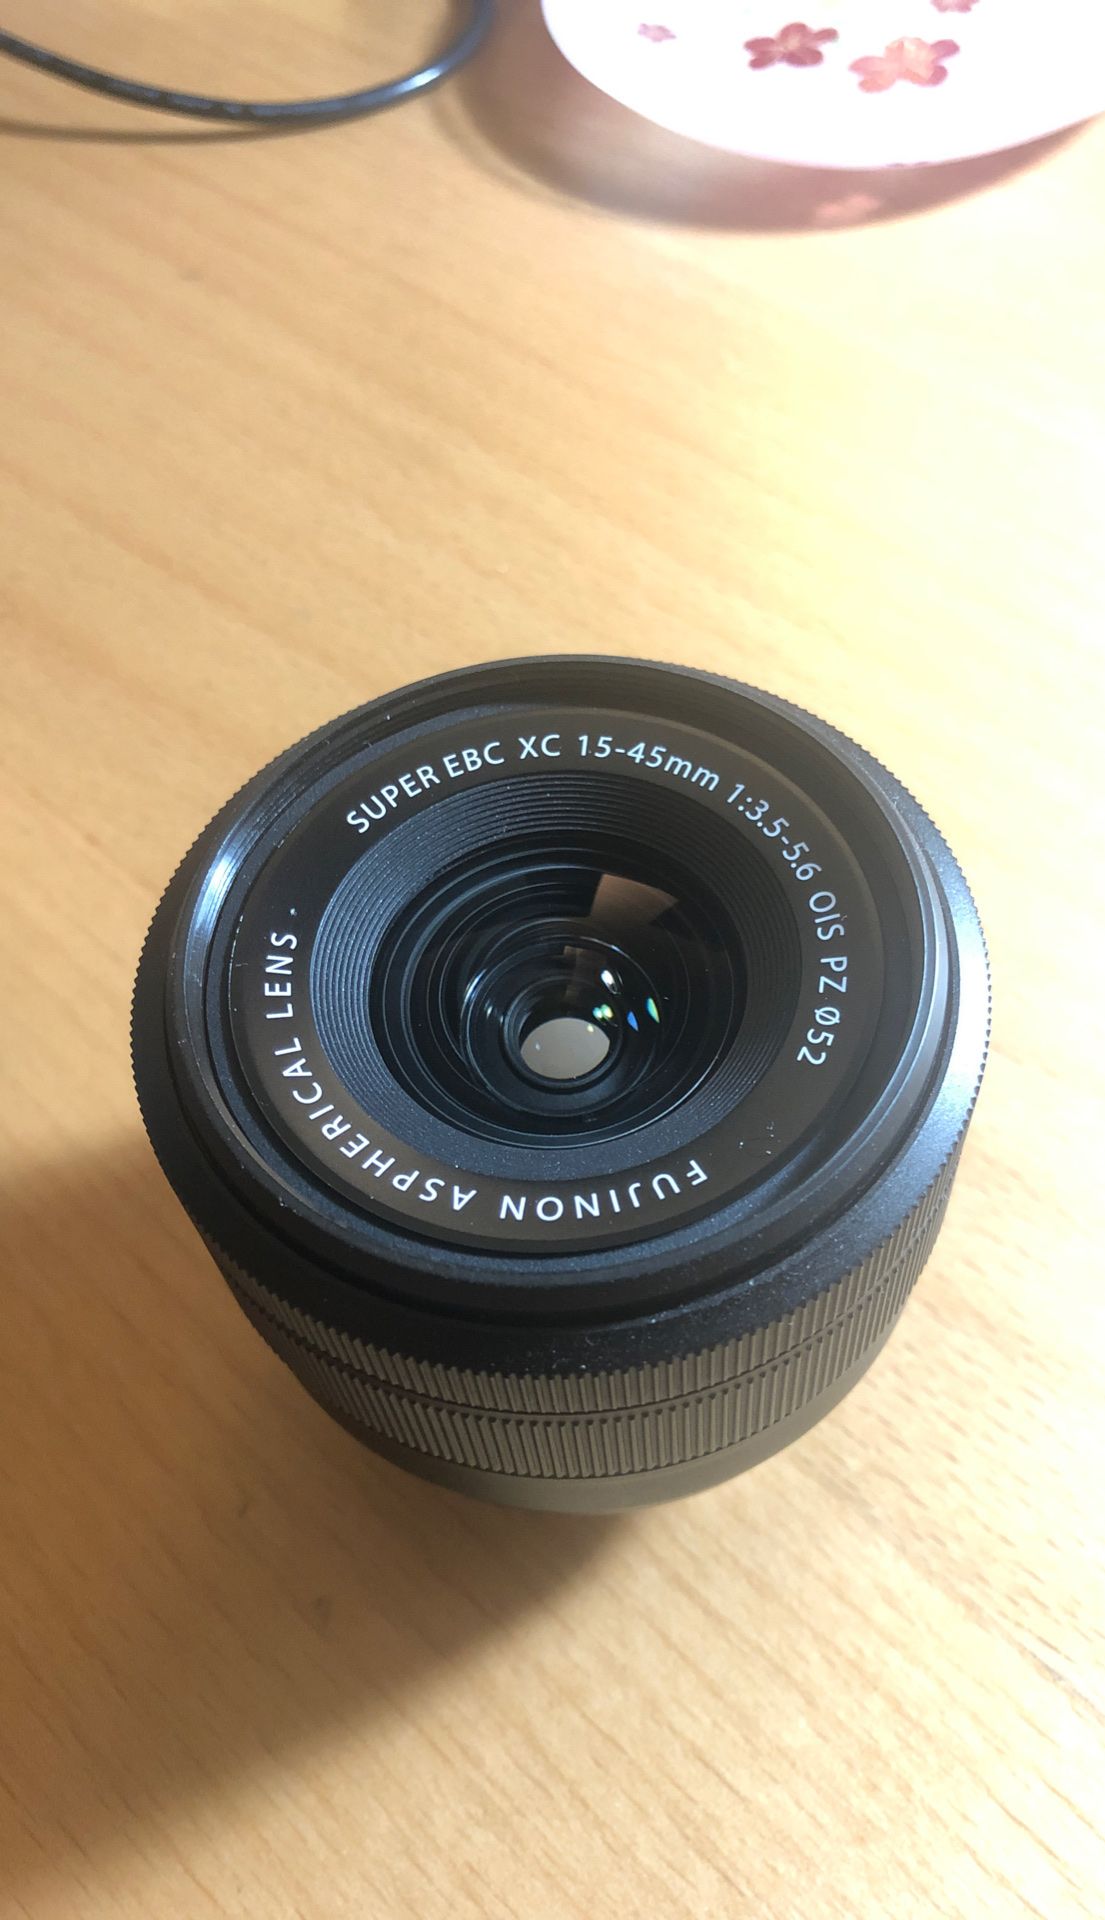 Fujinon XC 15-45mm F3.5-5.6 OIS PZ Lens - Black